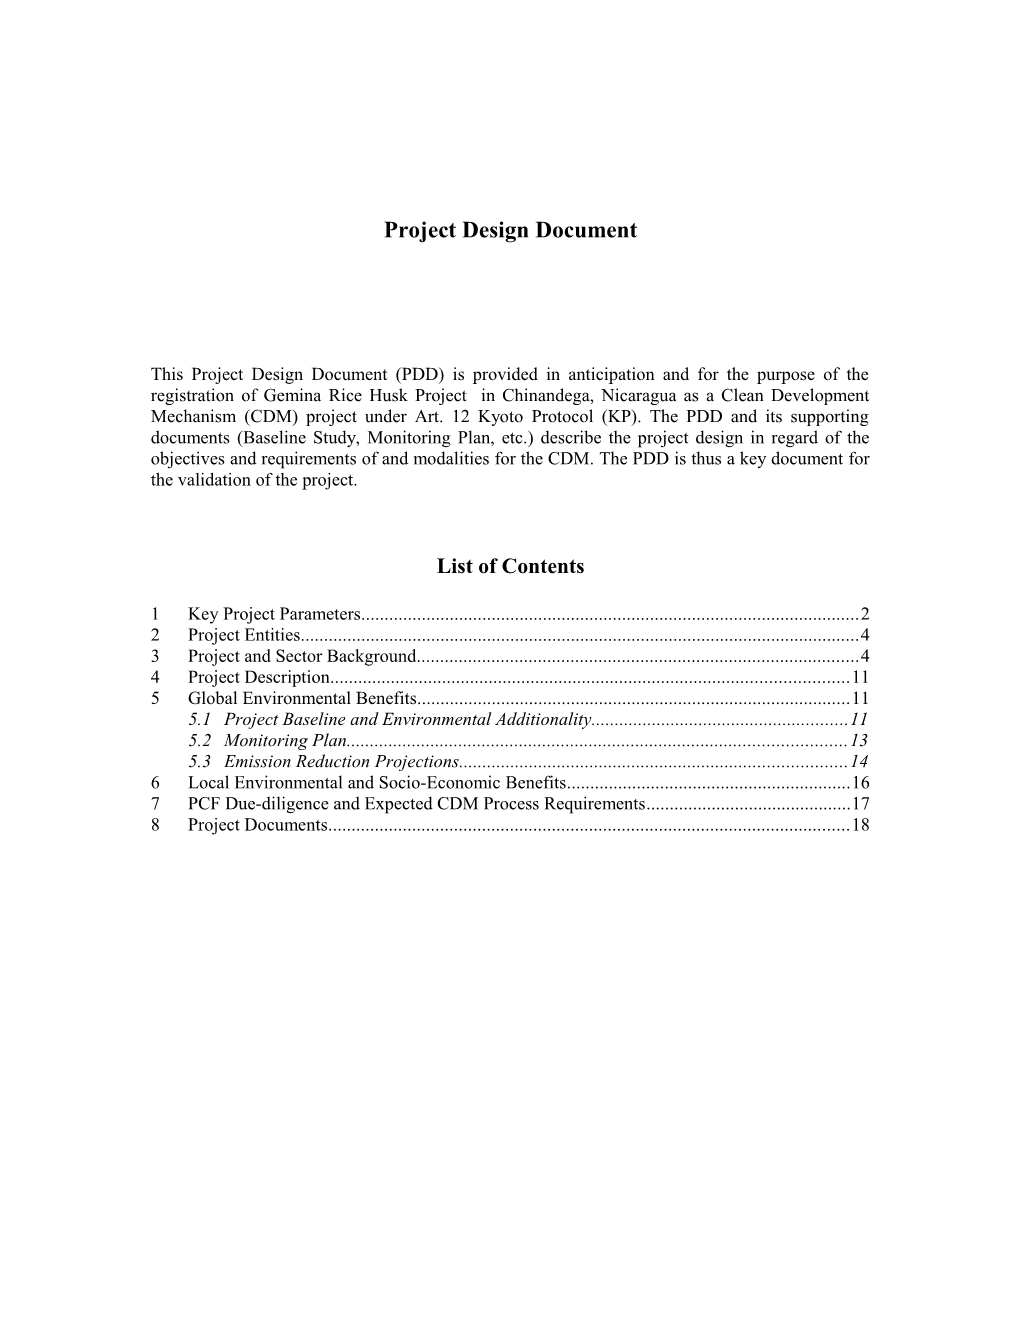 Project Design Document, Gemina Rice Husk Project, Nicaragua